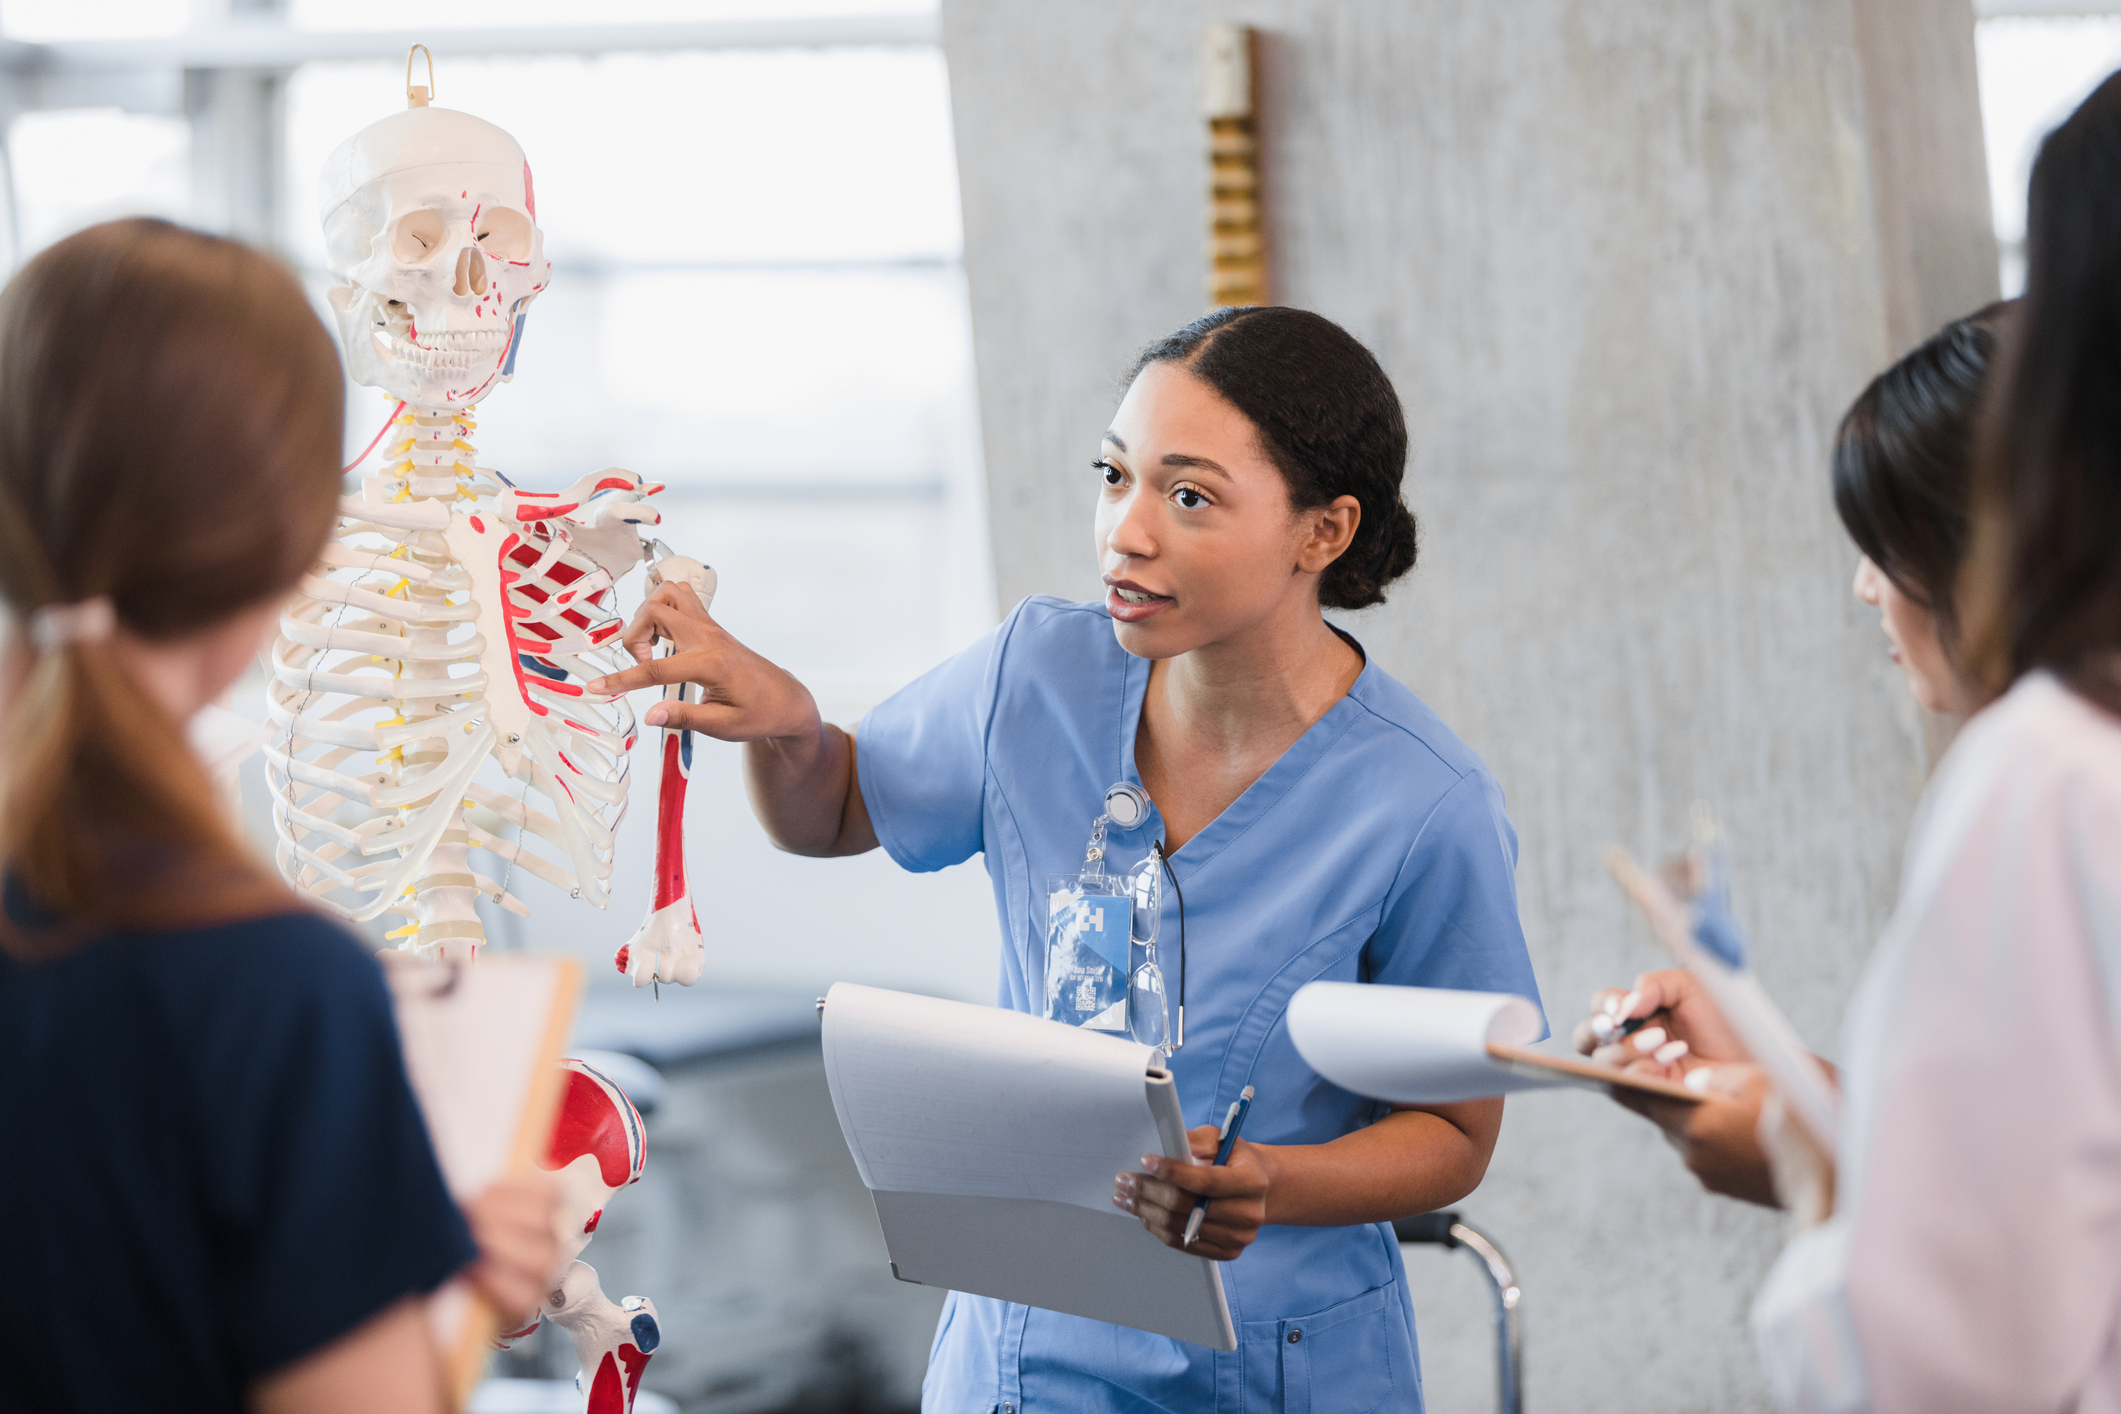 Is healthcare a good career path?